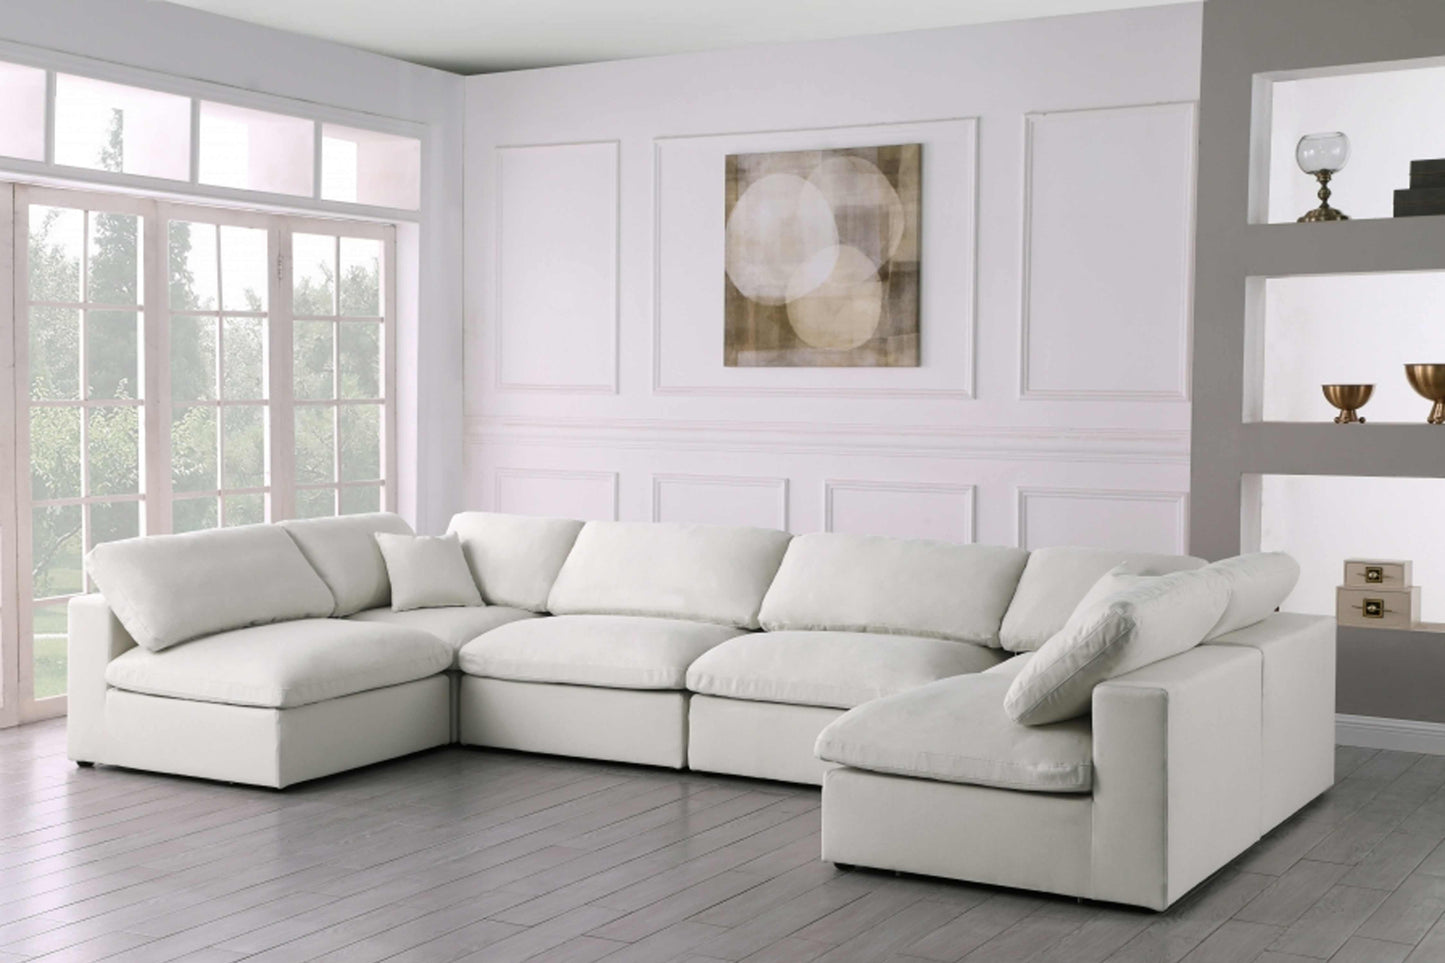 Serene Linen Deluxe Modular Down Filled Cloud-Like Comfort Overstuffed Sectional SKU: 601-Sec6D - Venini Furniture 